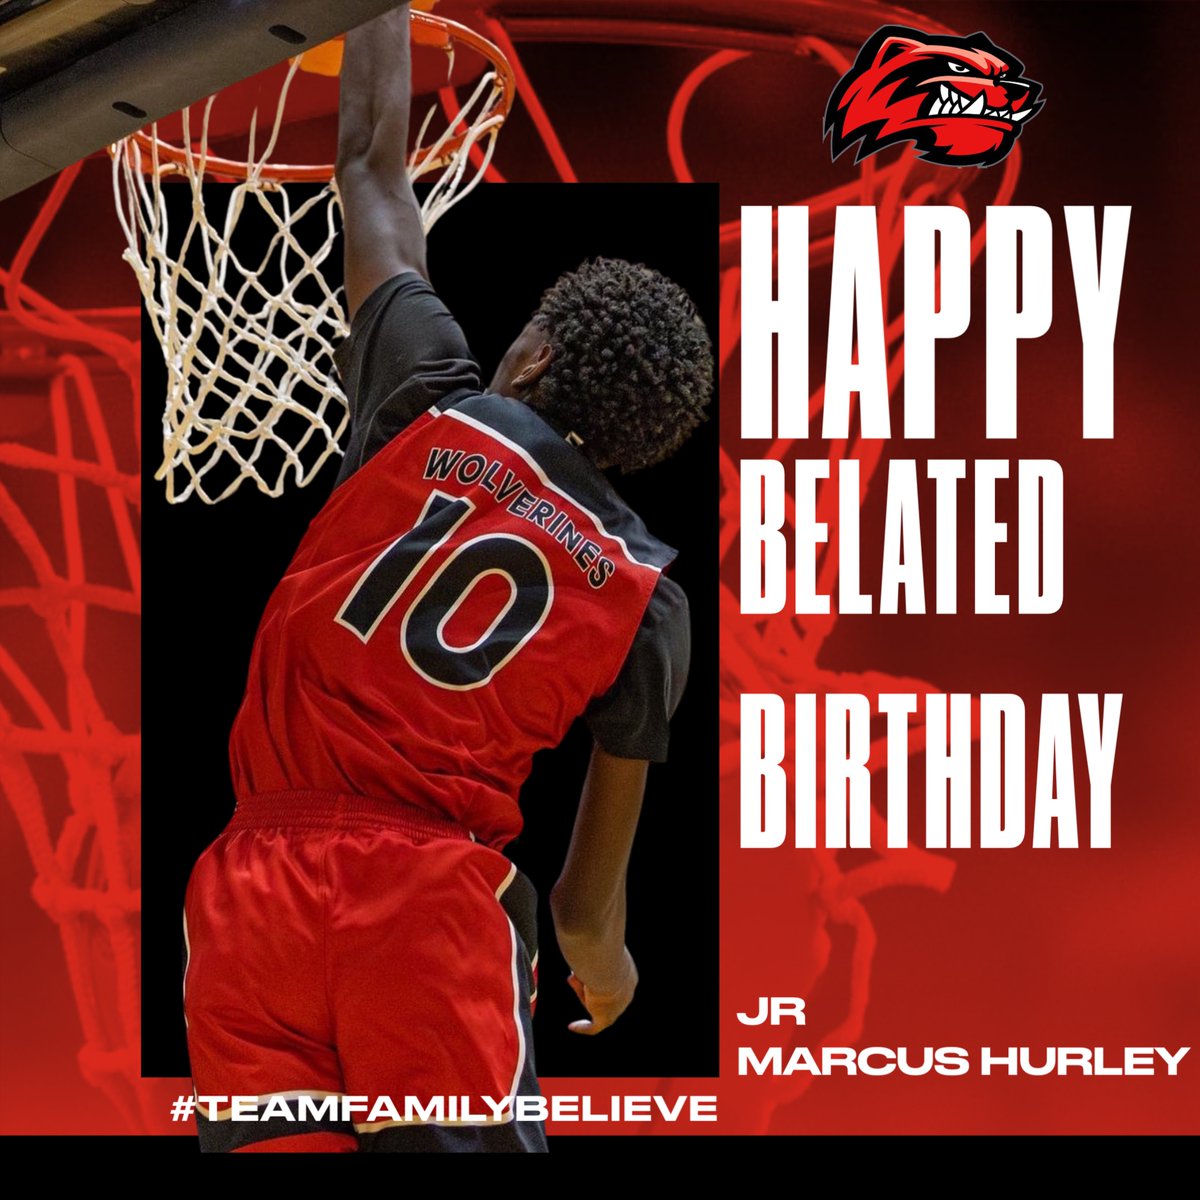 🚨 BRITHDAY ALERT 🚨 Happy Belated Birthday to Marcus Hurley‼️ #TeamFamilyBelieve #WestUp